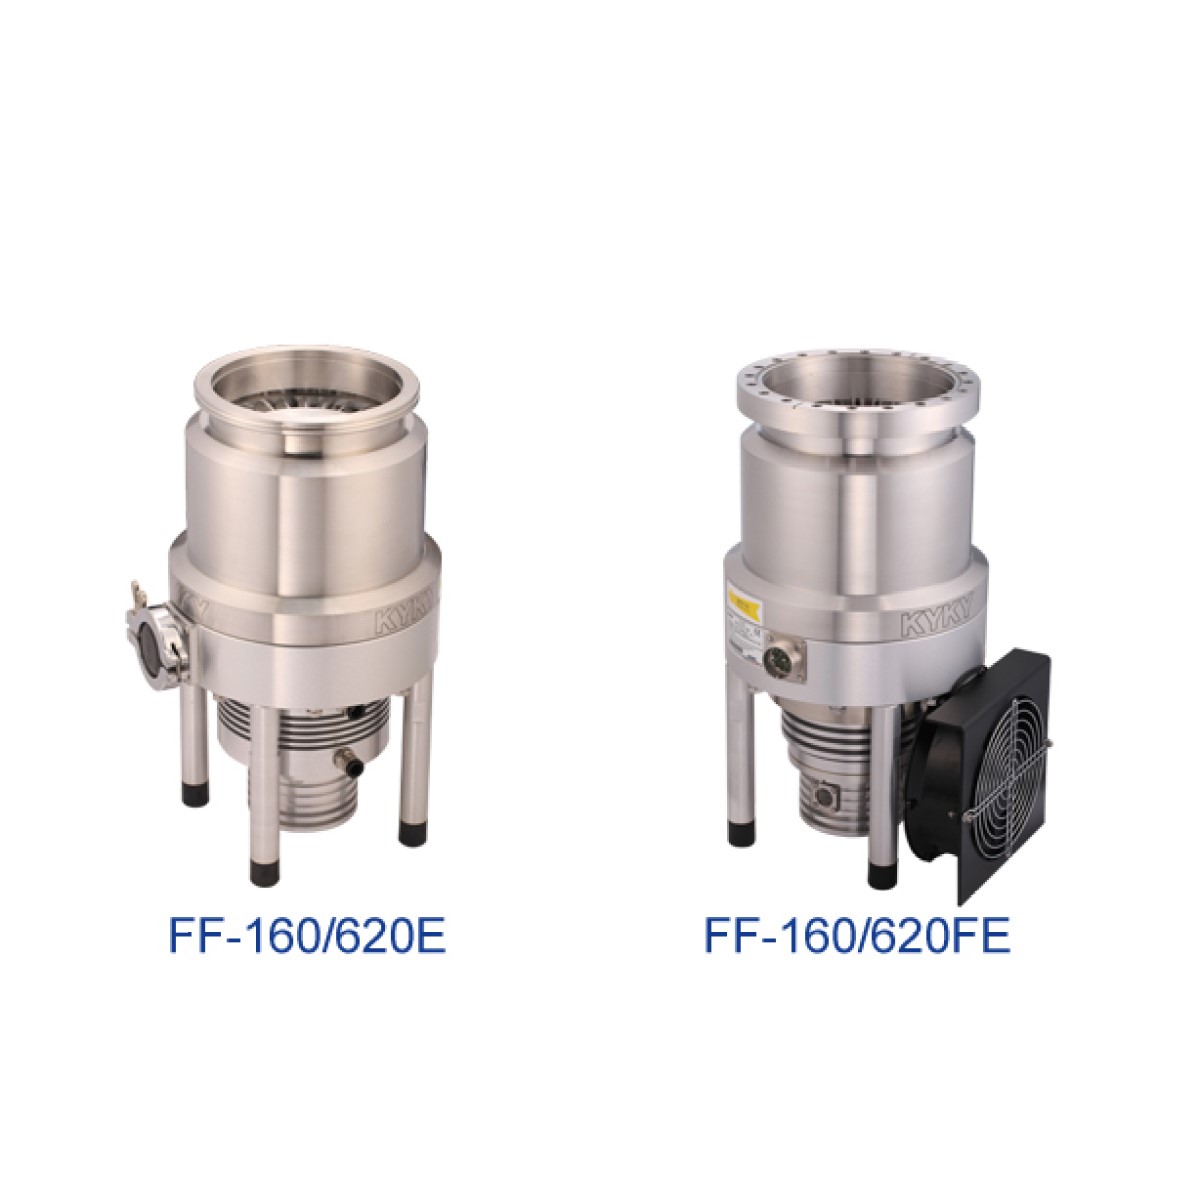 MDFF-160/620E Molecular pump